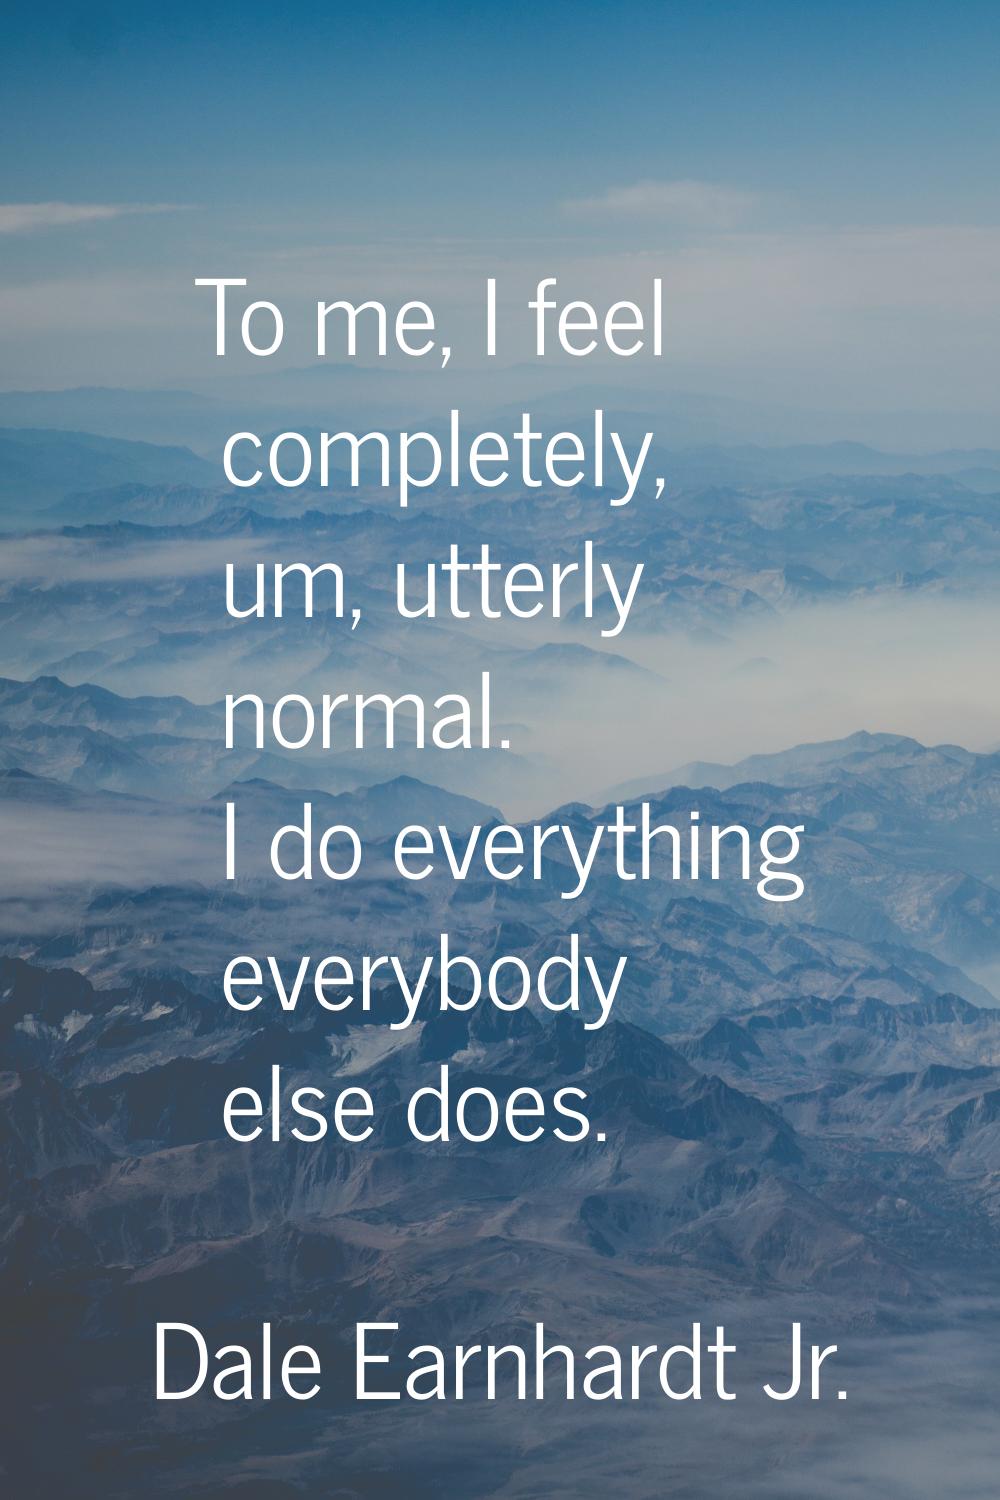 To me, I feel completely, um, utterly normal. I do everything everybody else does.